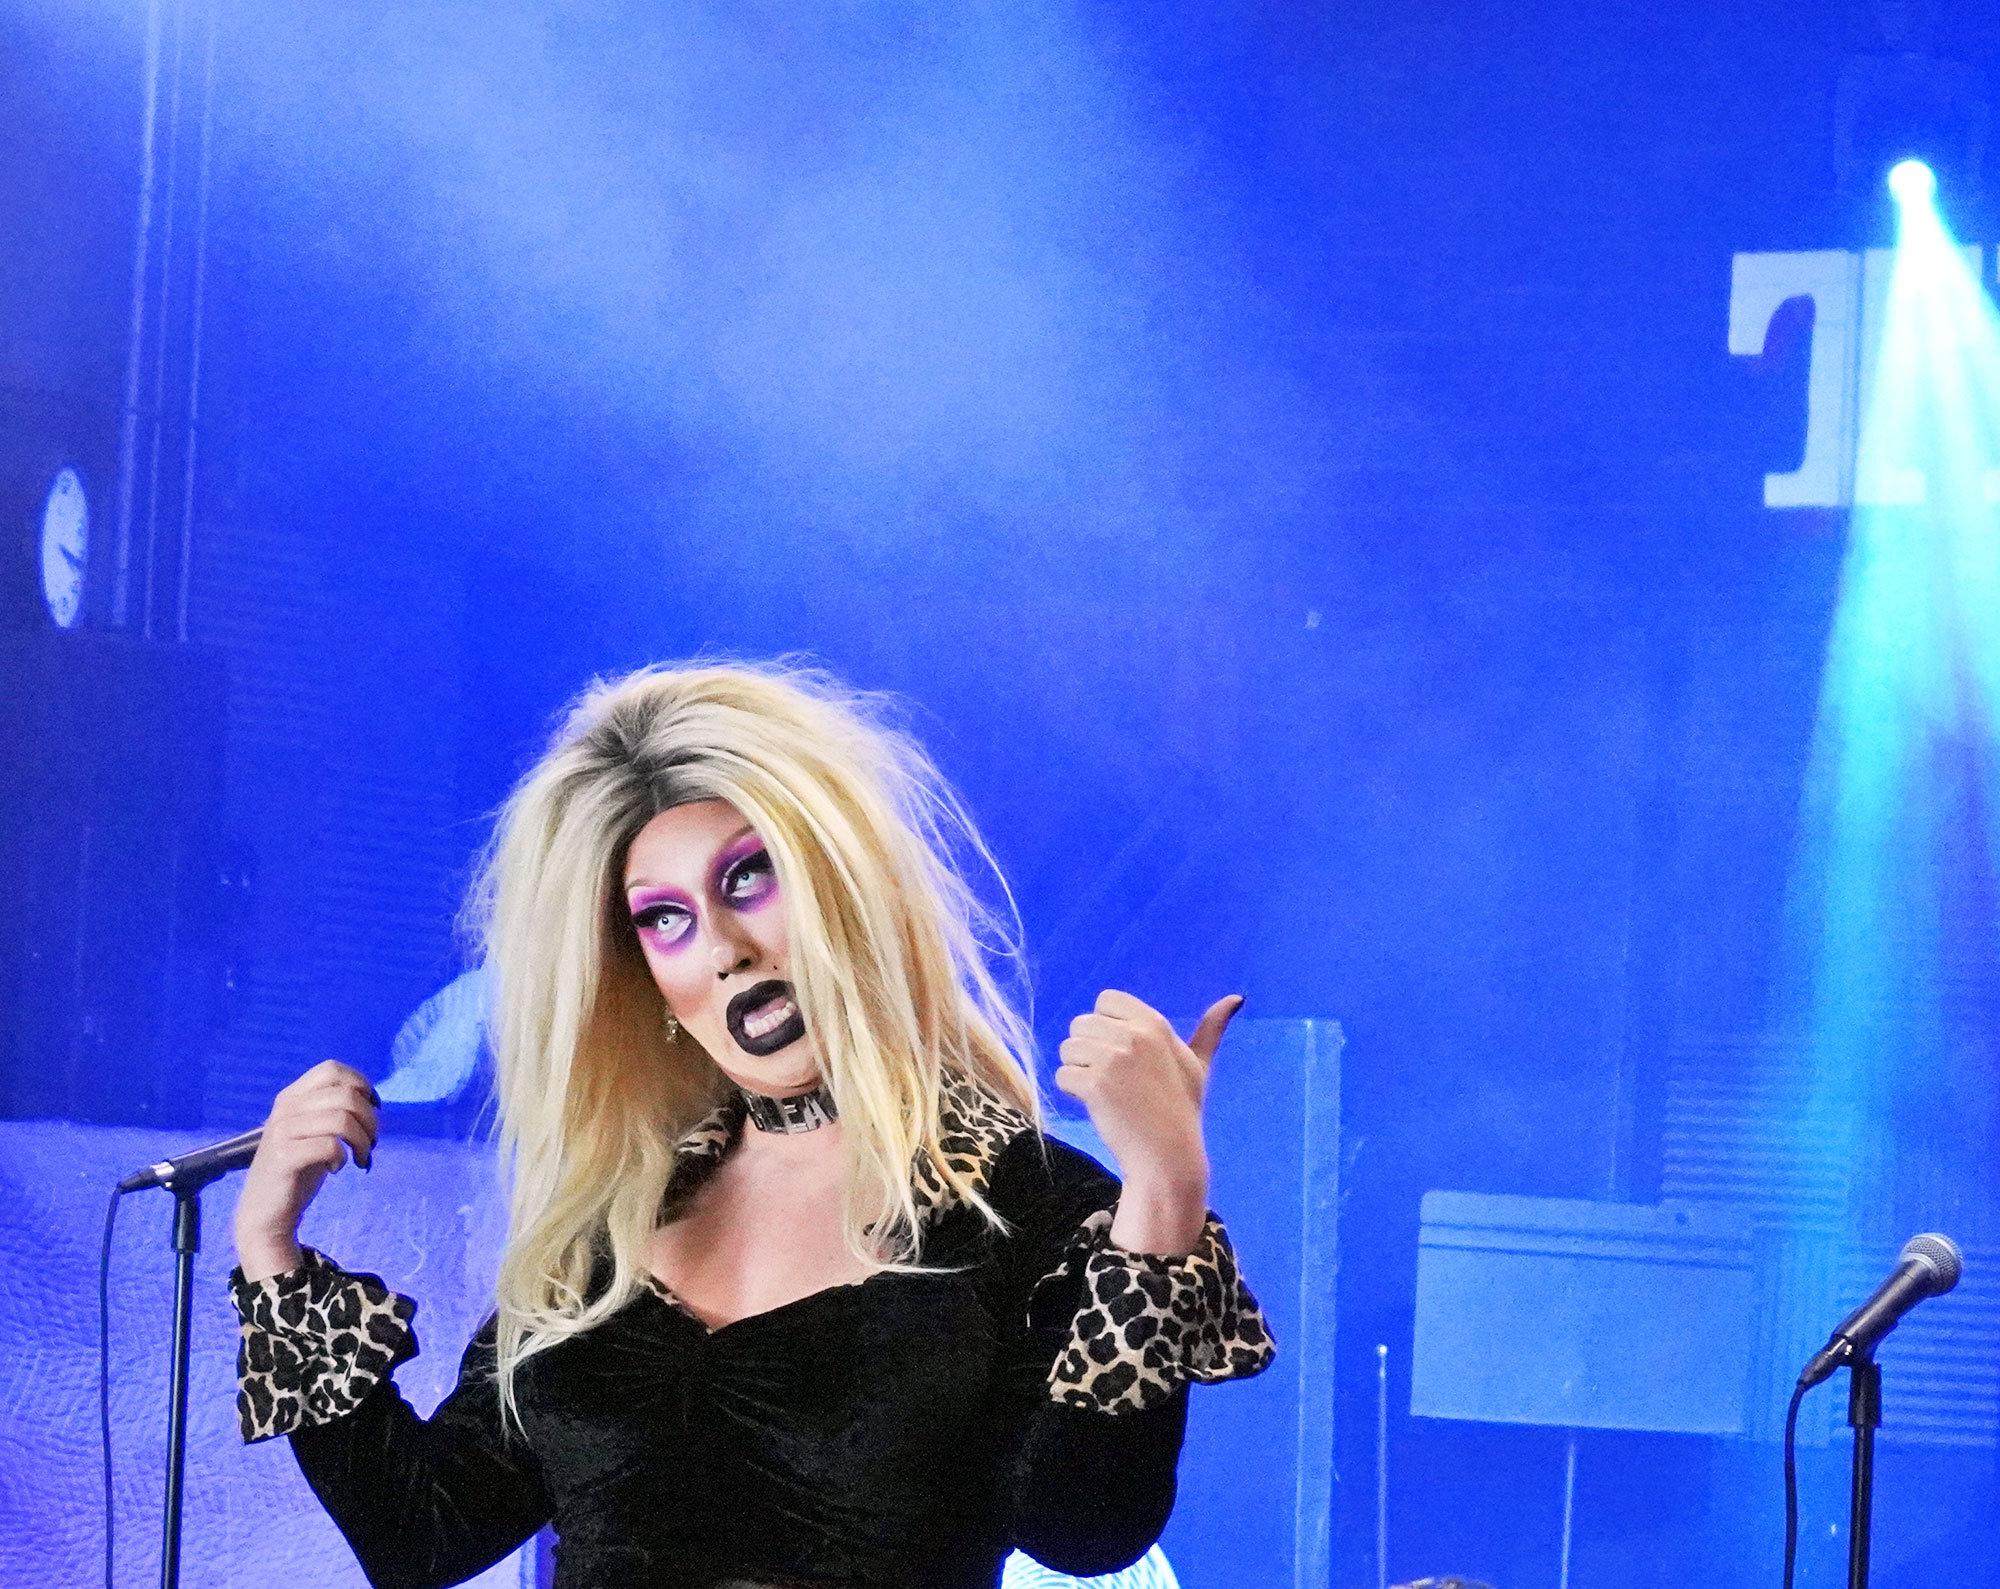 Dallas drag queen Bleach performing at drag brunch.